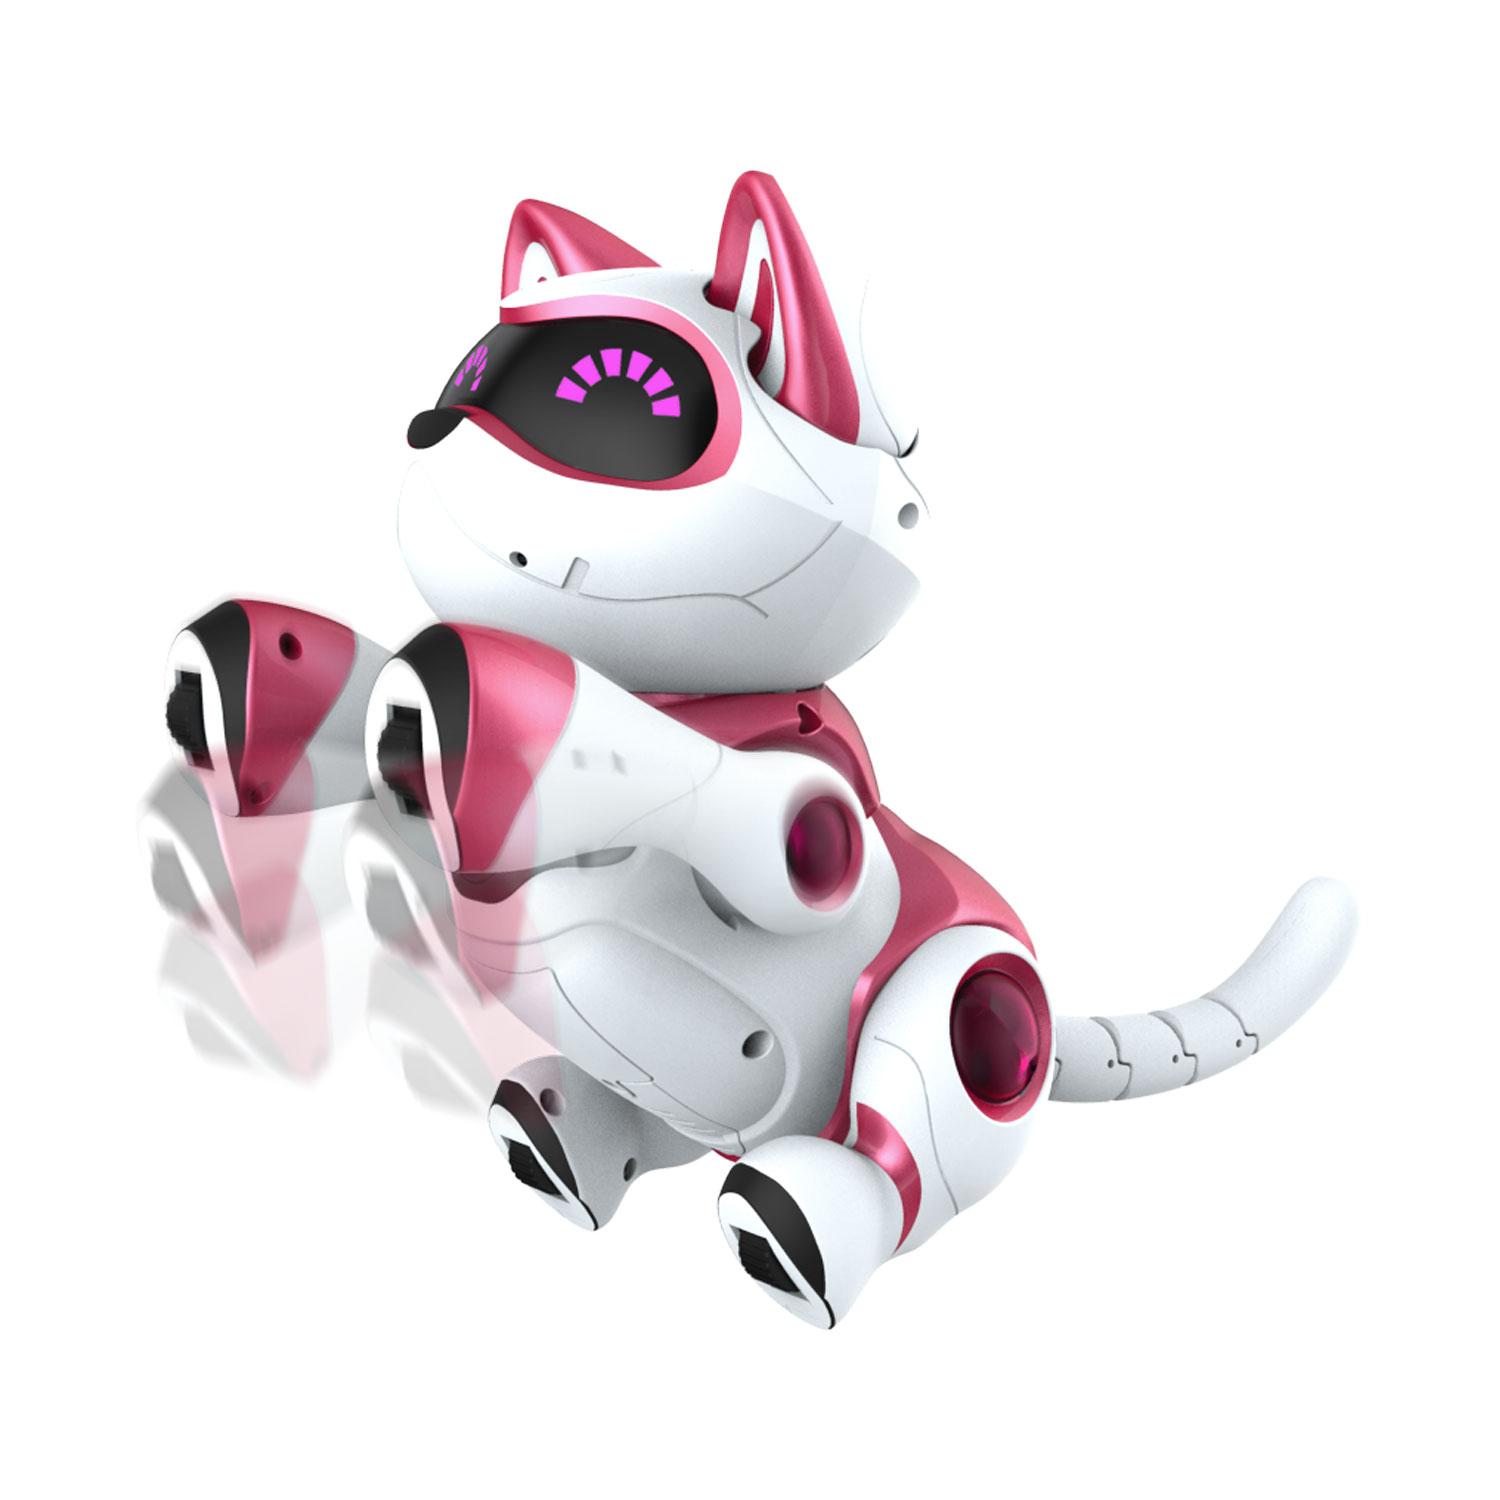 Игры робот кошка. Кошка робот teksta Kitty. Интерактивная кошка teksta Kitty. Робот teksta кошка teksta Kitty, интерактивная артикул: 1003217. Робот zoomer кот.